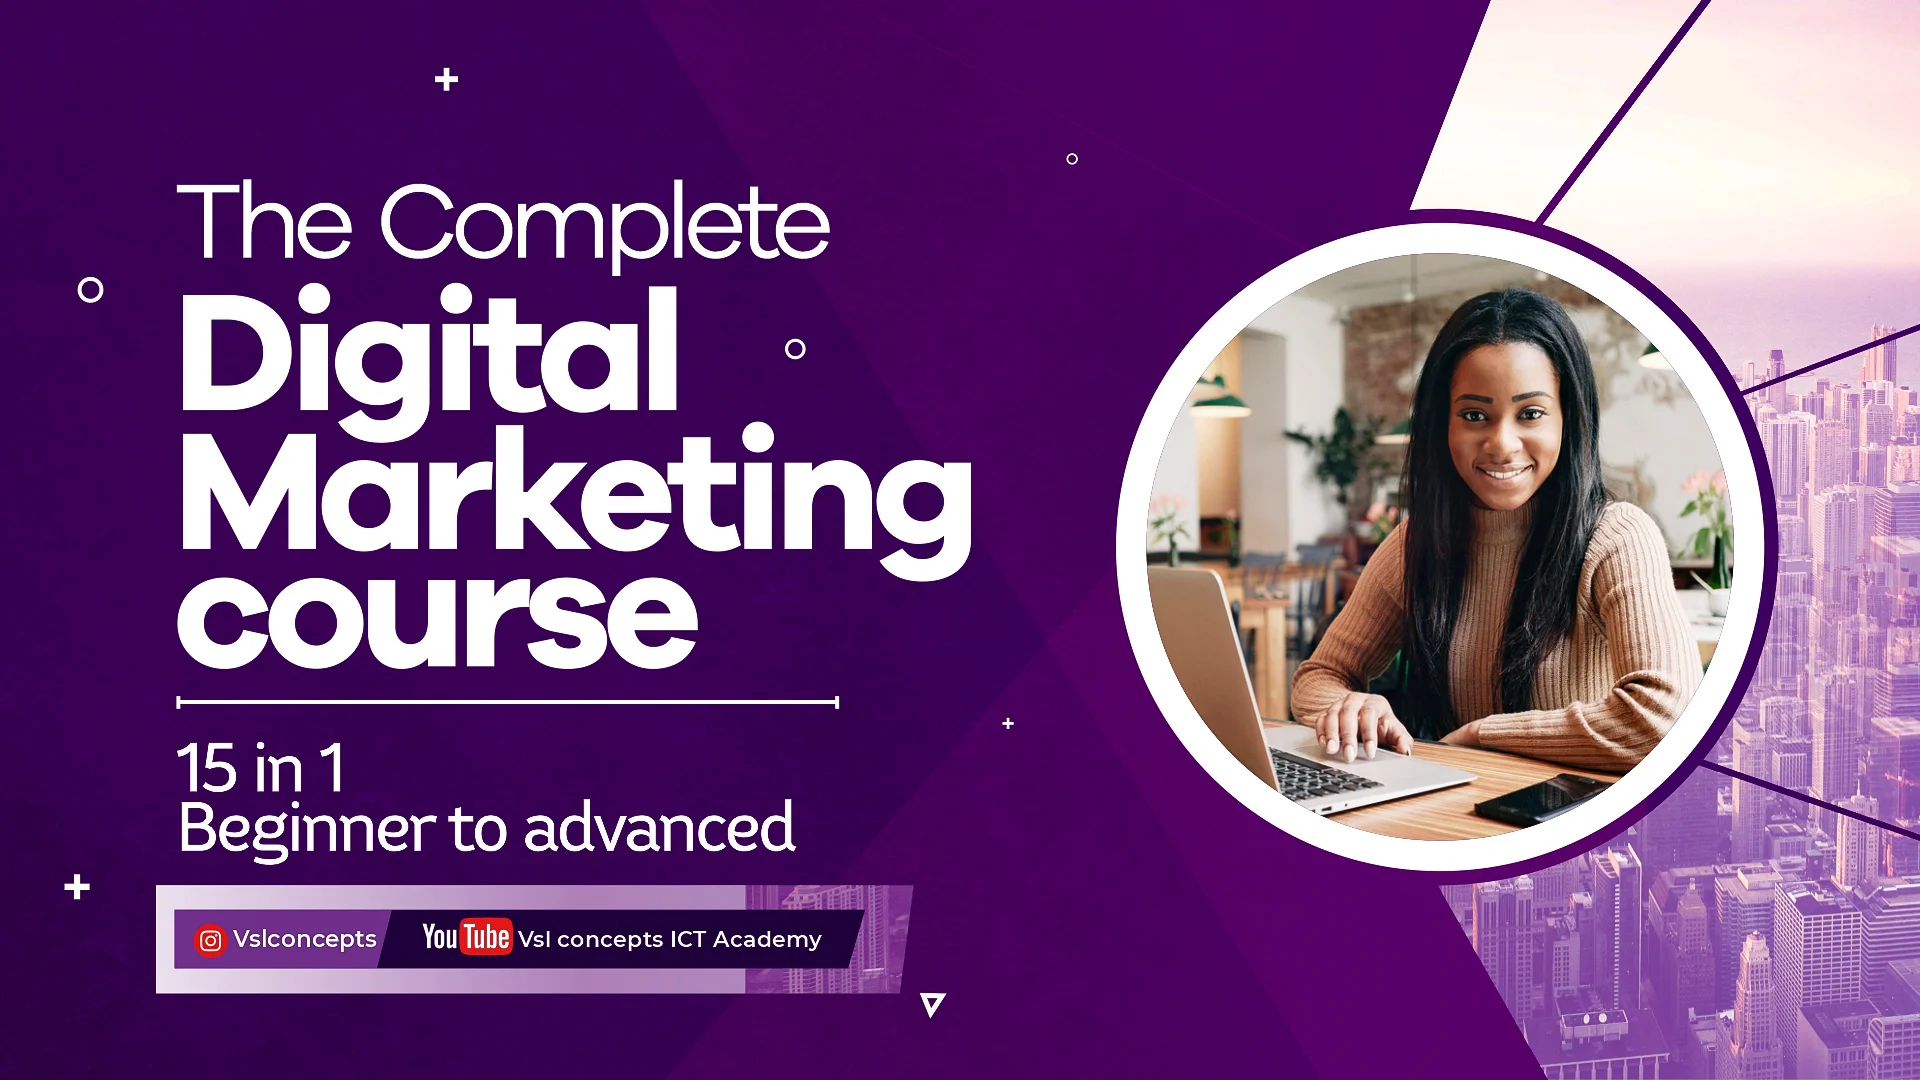 Digital Marketing Training 